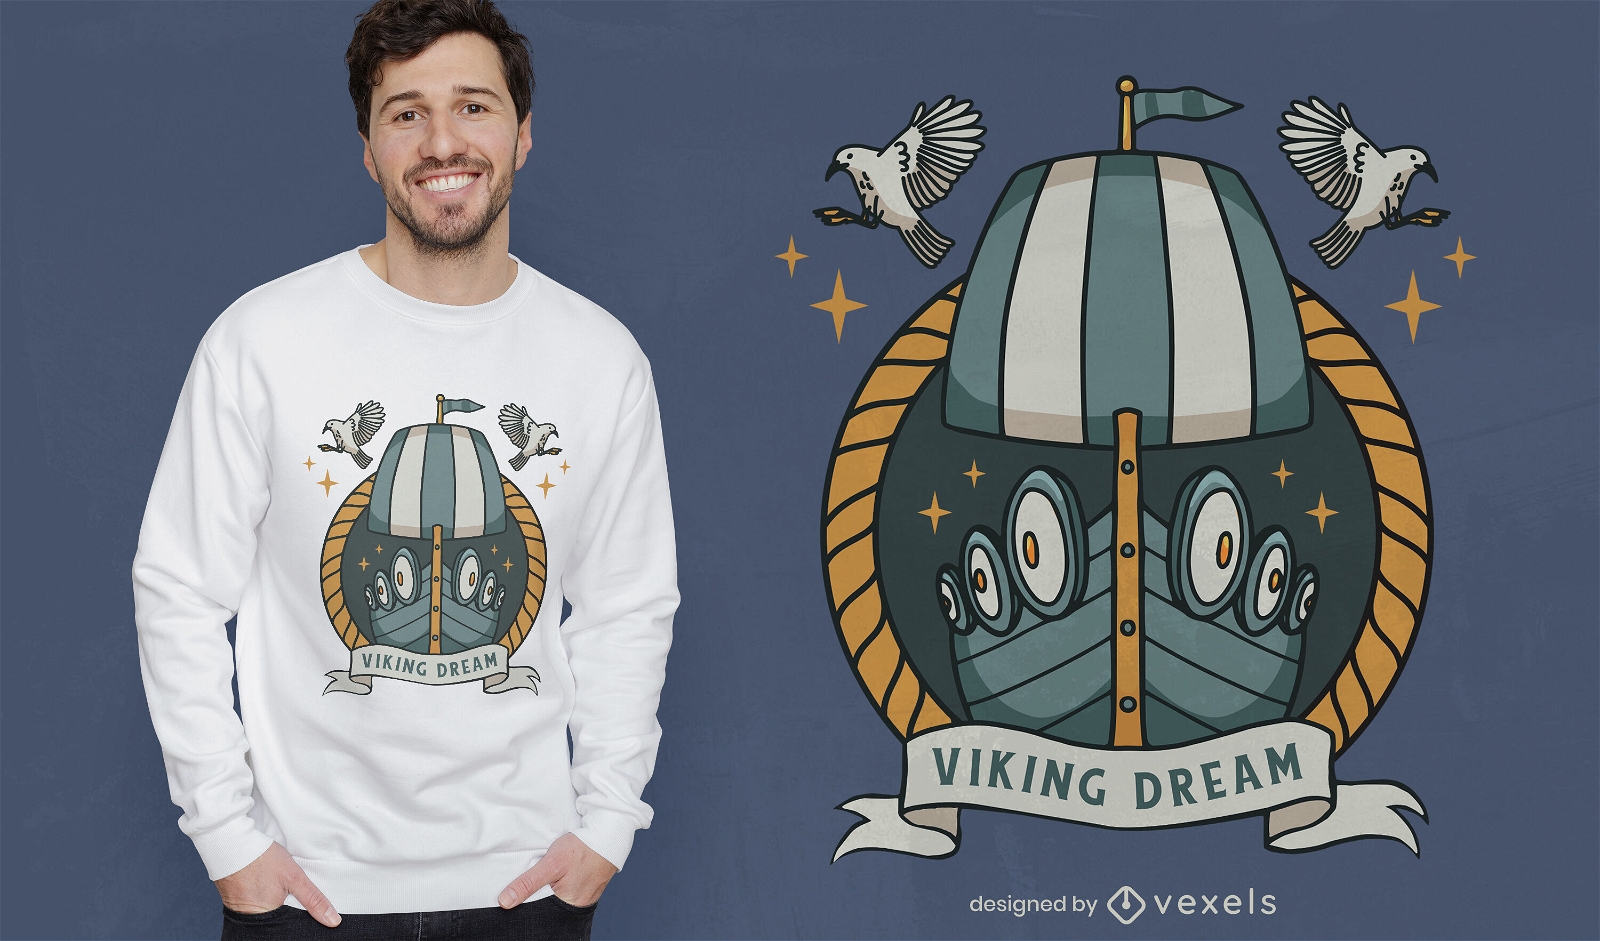 Diseño de camiseta con cita de barco vikingo